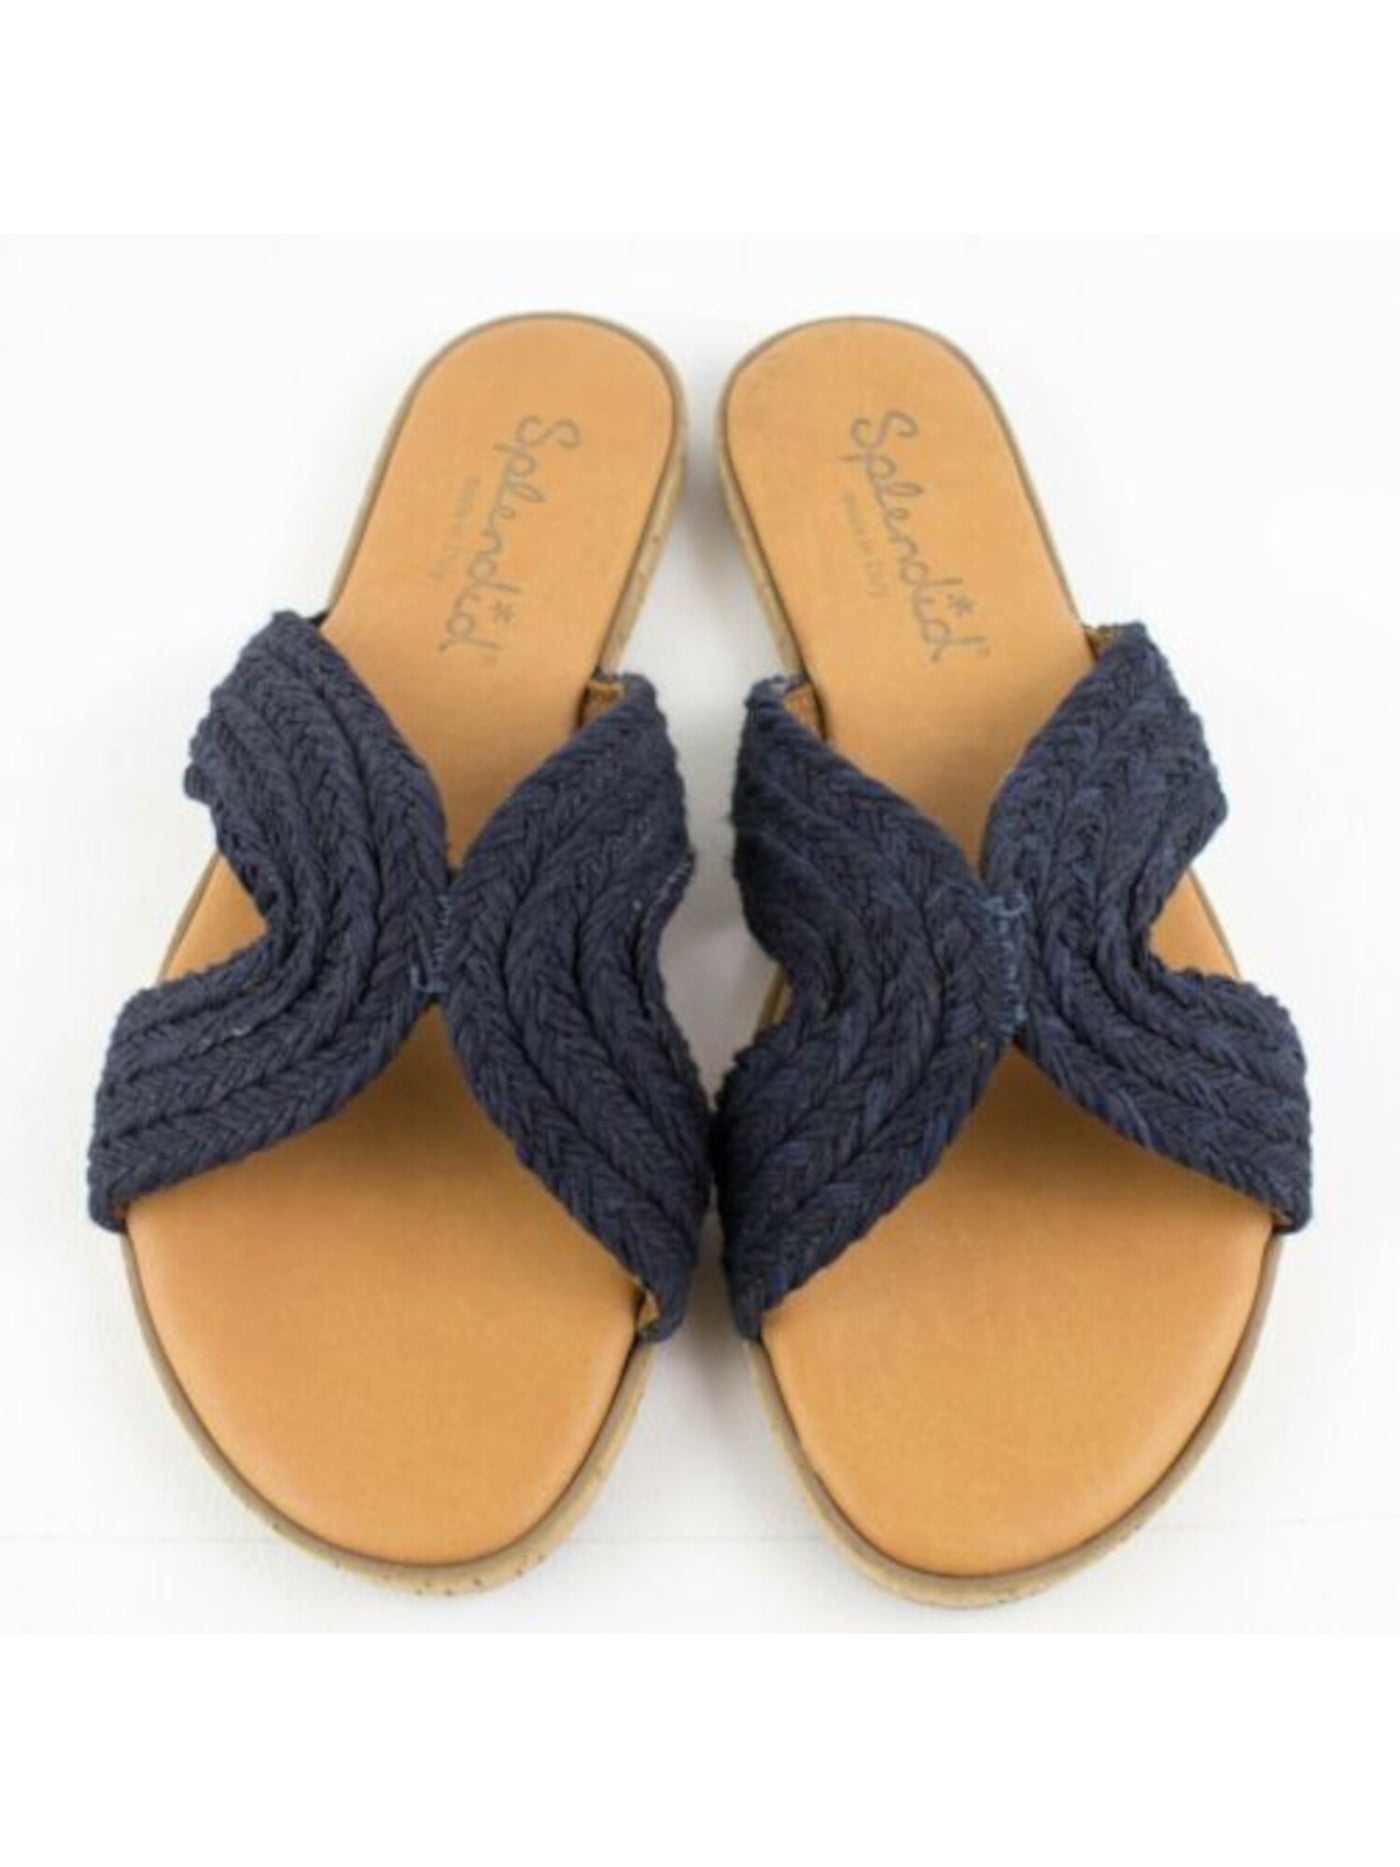 SPLENDID Womens Navy Comfort Braided Suzette Round Toe Platform Slip On Slide Sandals Shoes 8 M